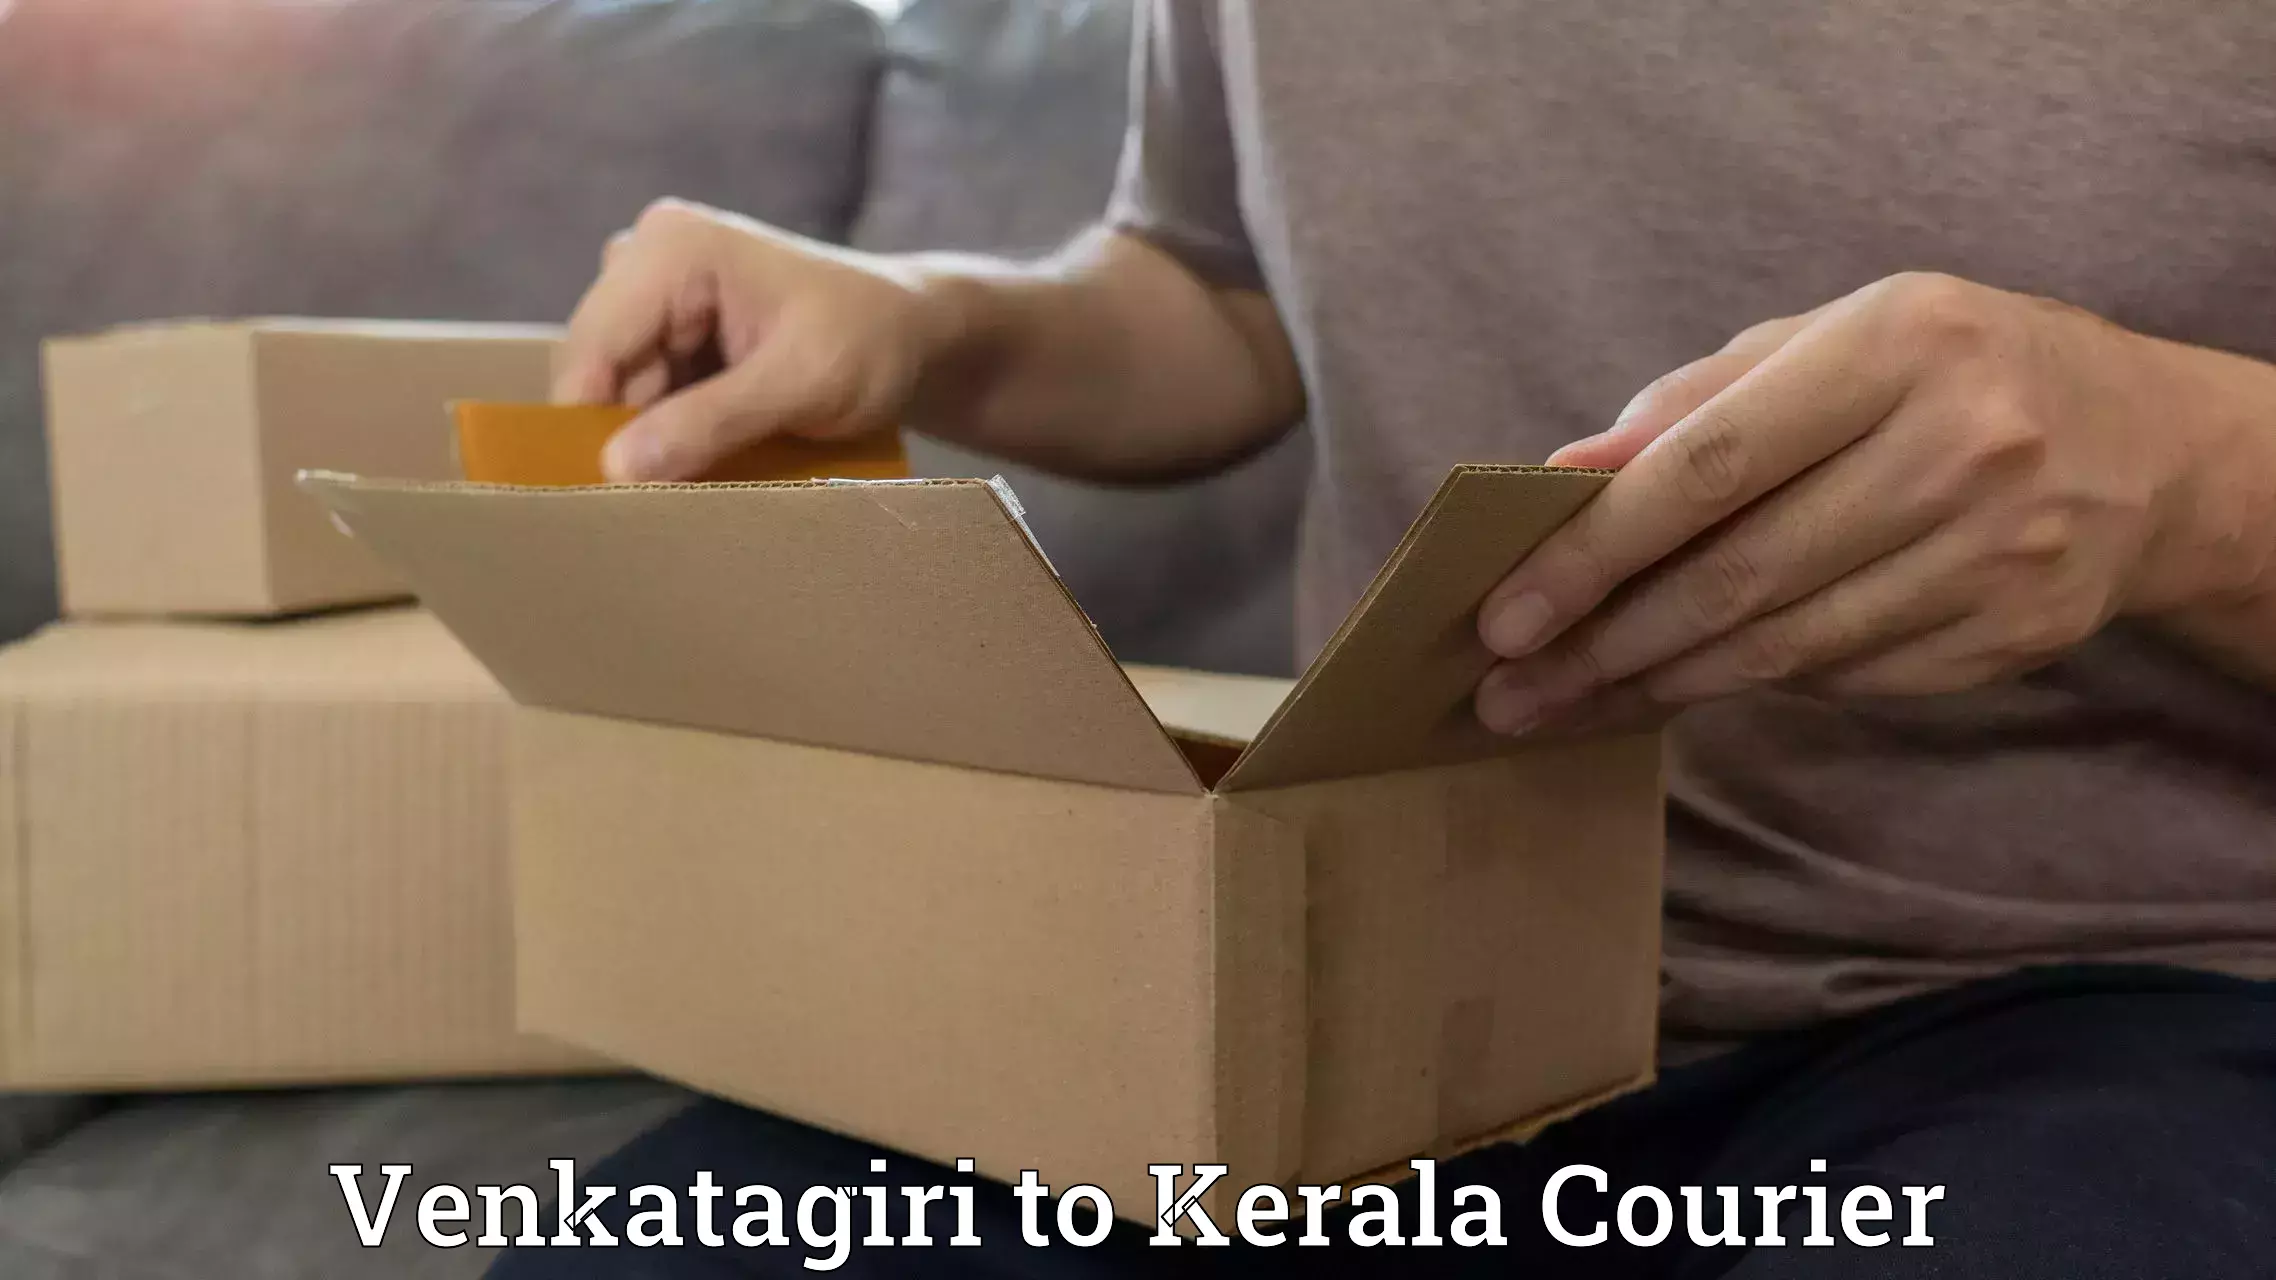 Delivery service partnership Venkatagiri to Kerala